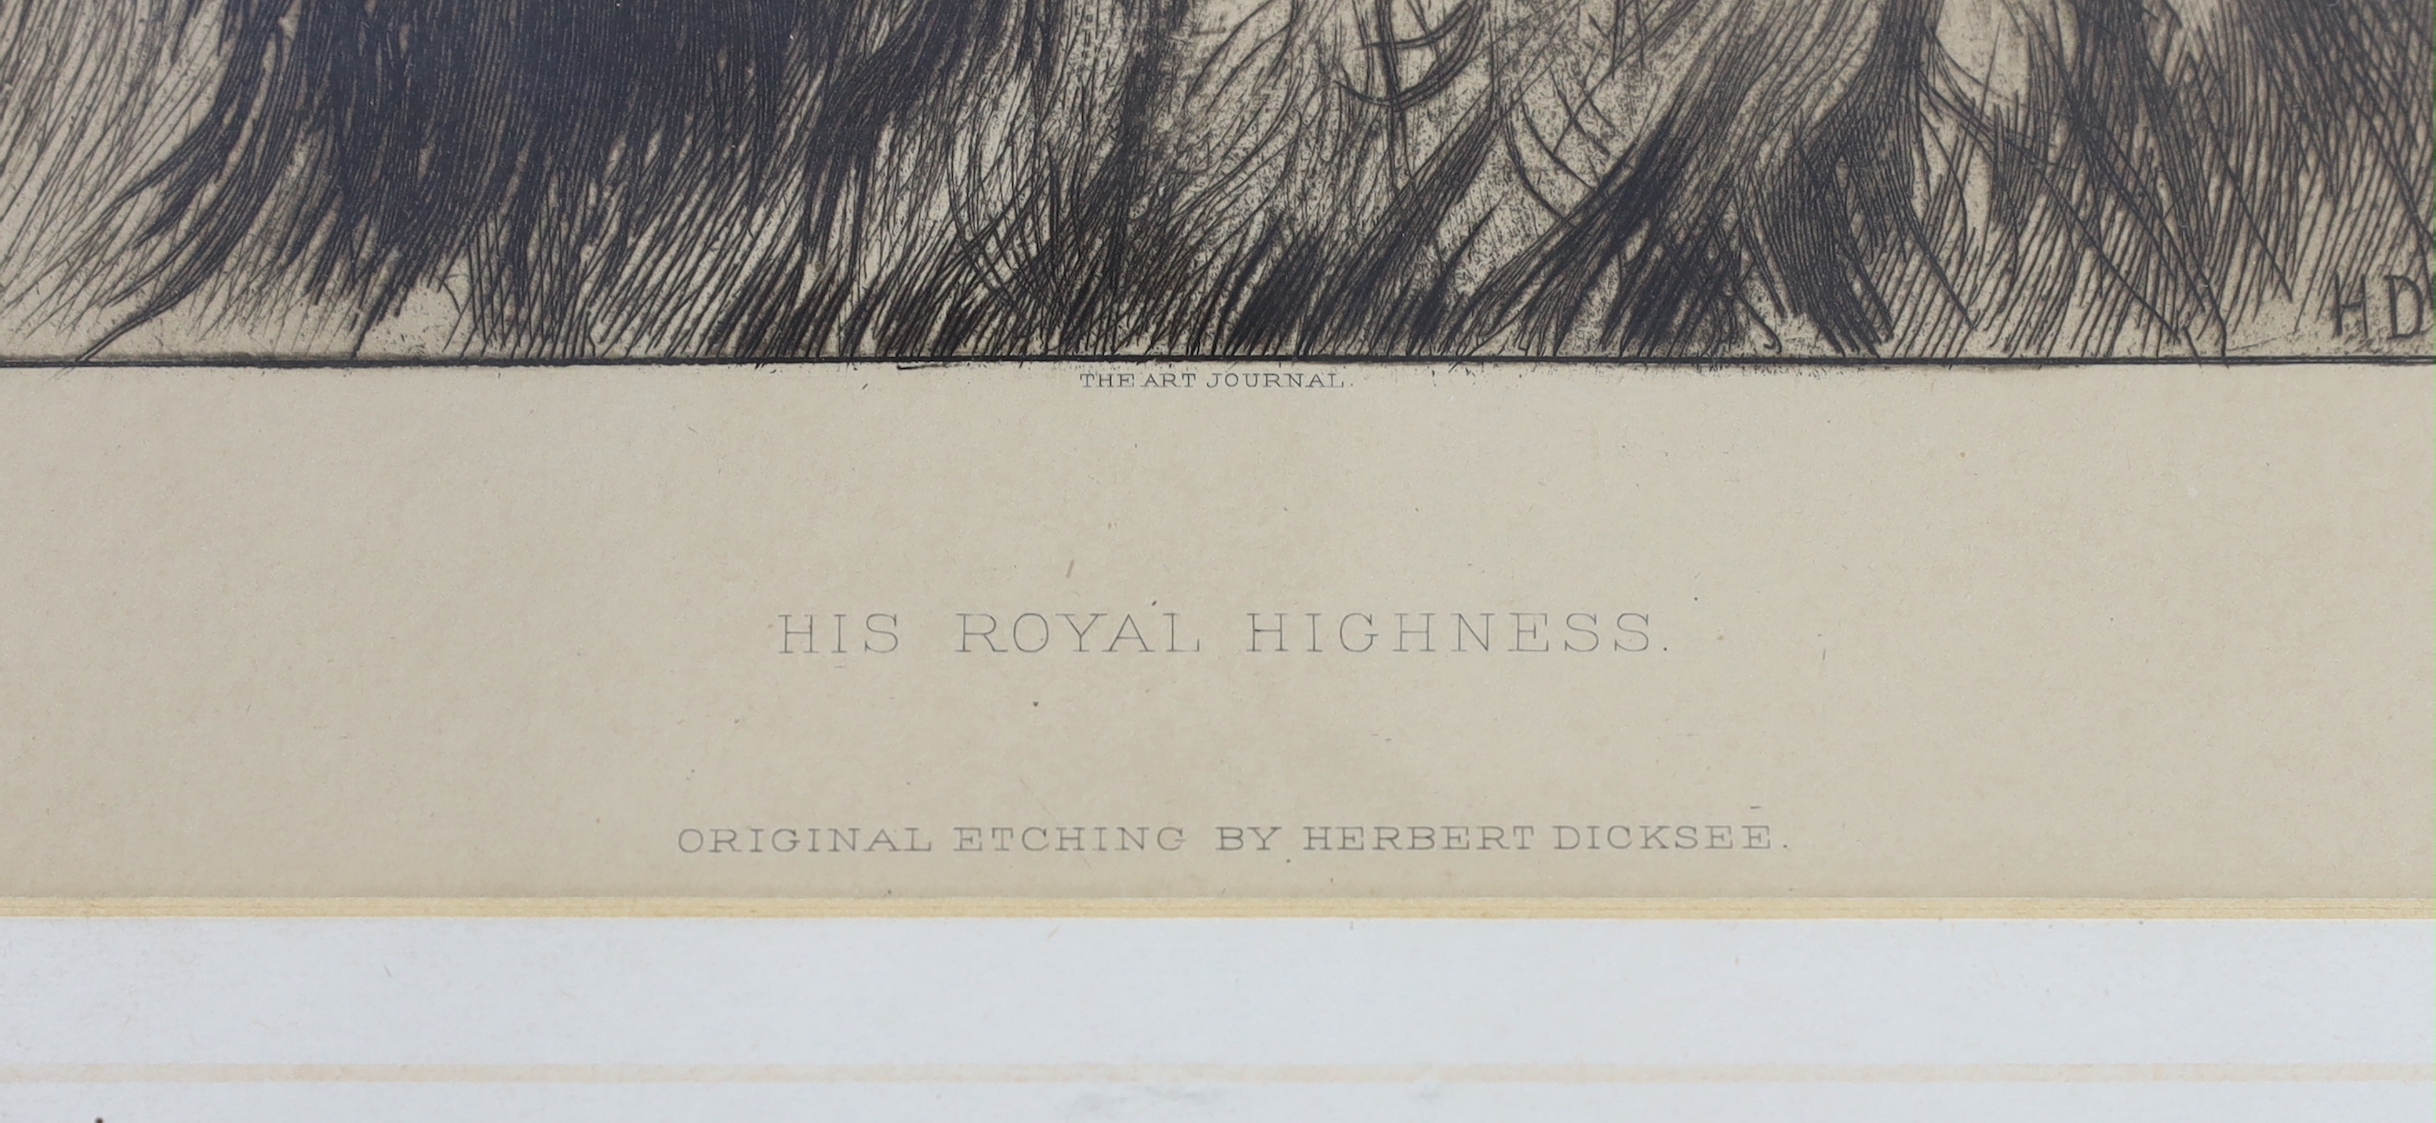 Herbert Dicksee (1862-1942), etching, 'His Royal Highness', 28 x 19cm